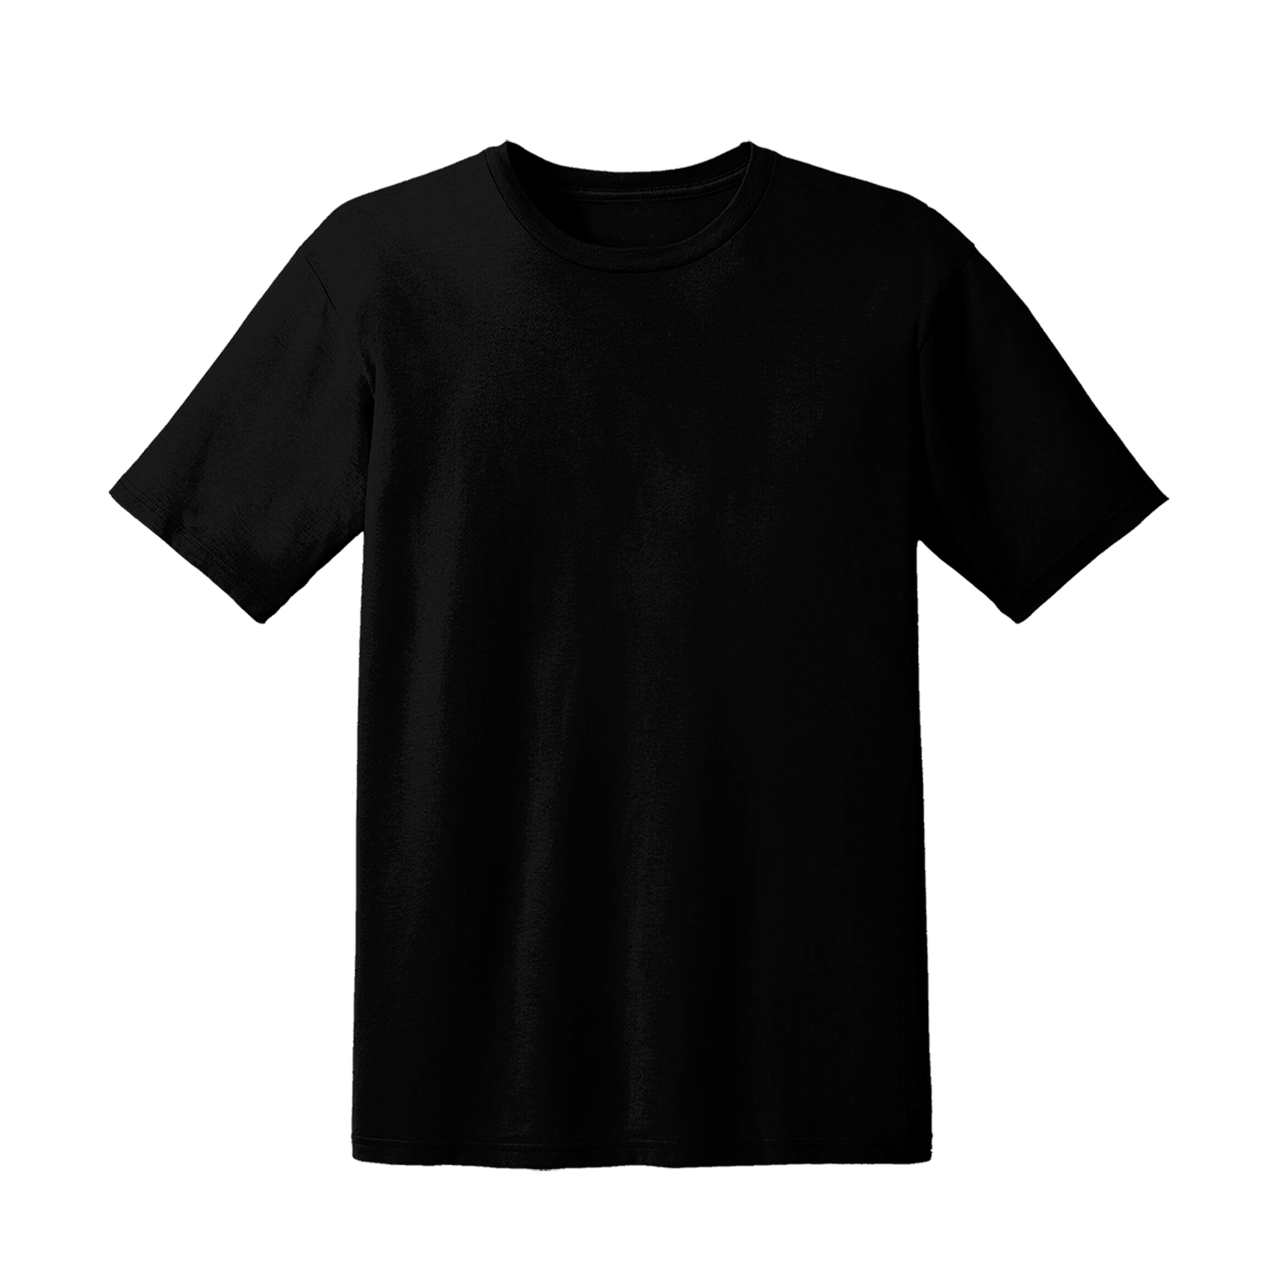 T-shirt Design Mistakes